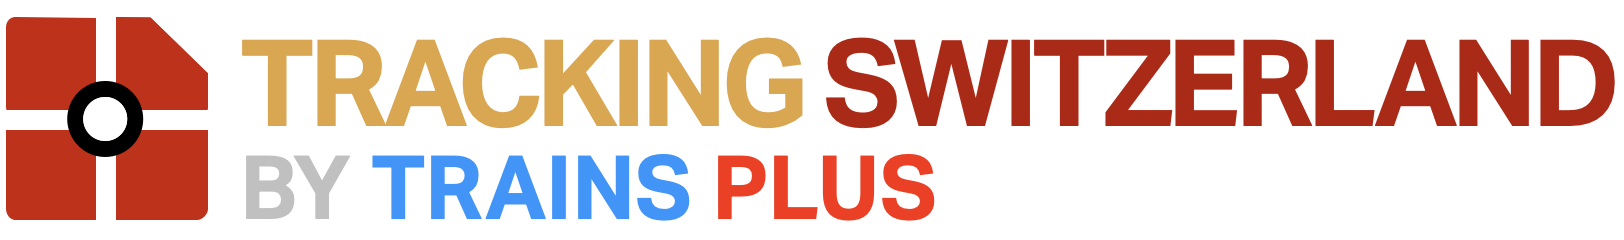 Tracking Switzerland by Trains Plus Logo